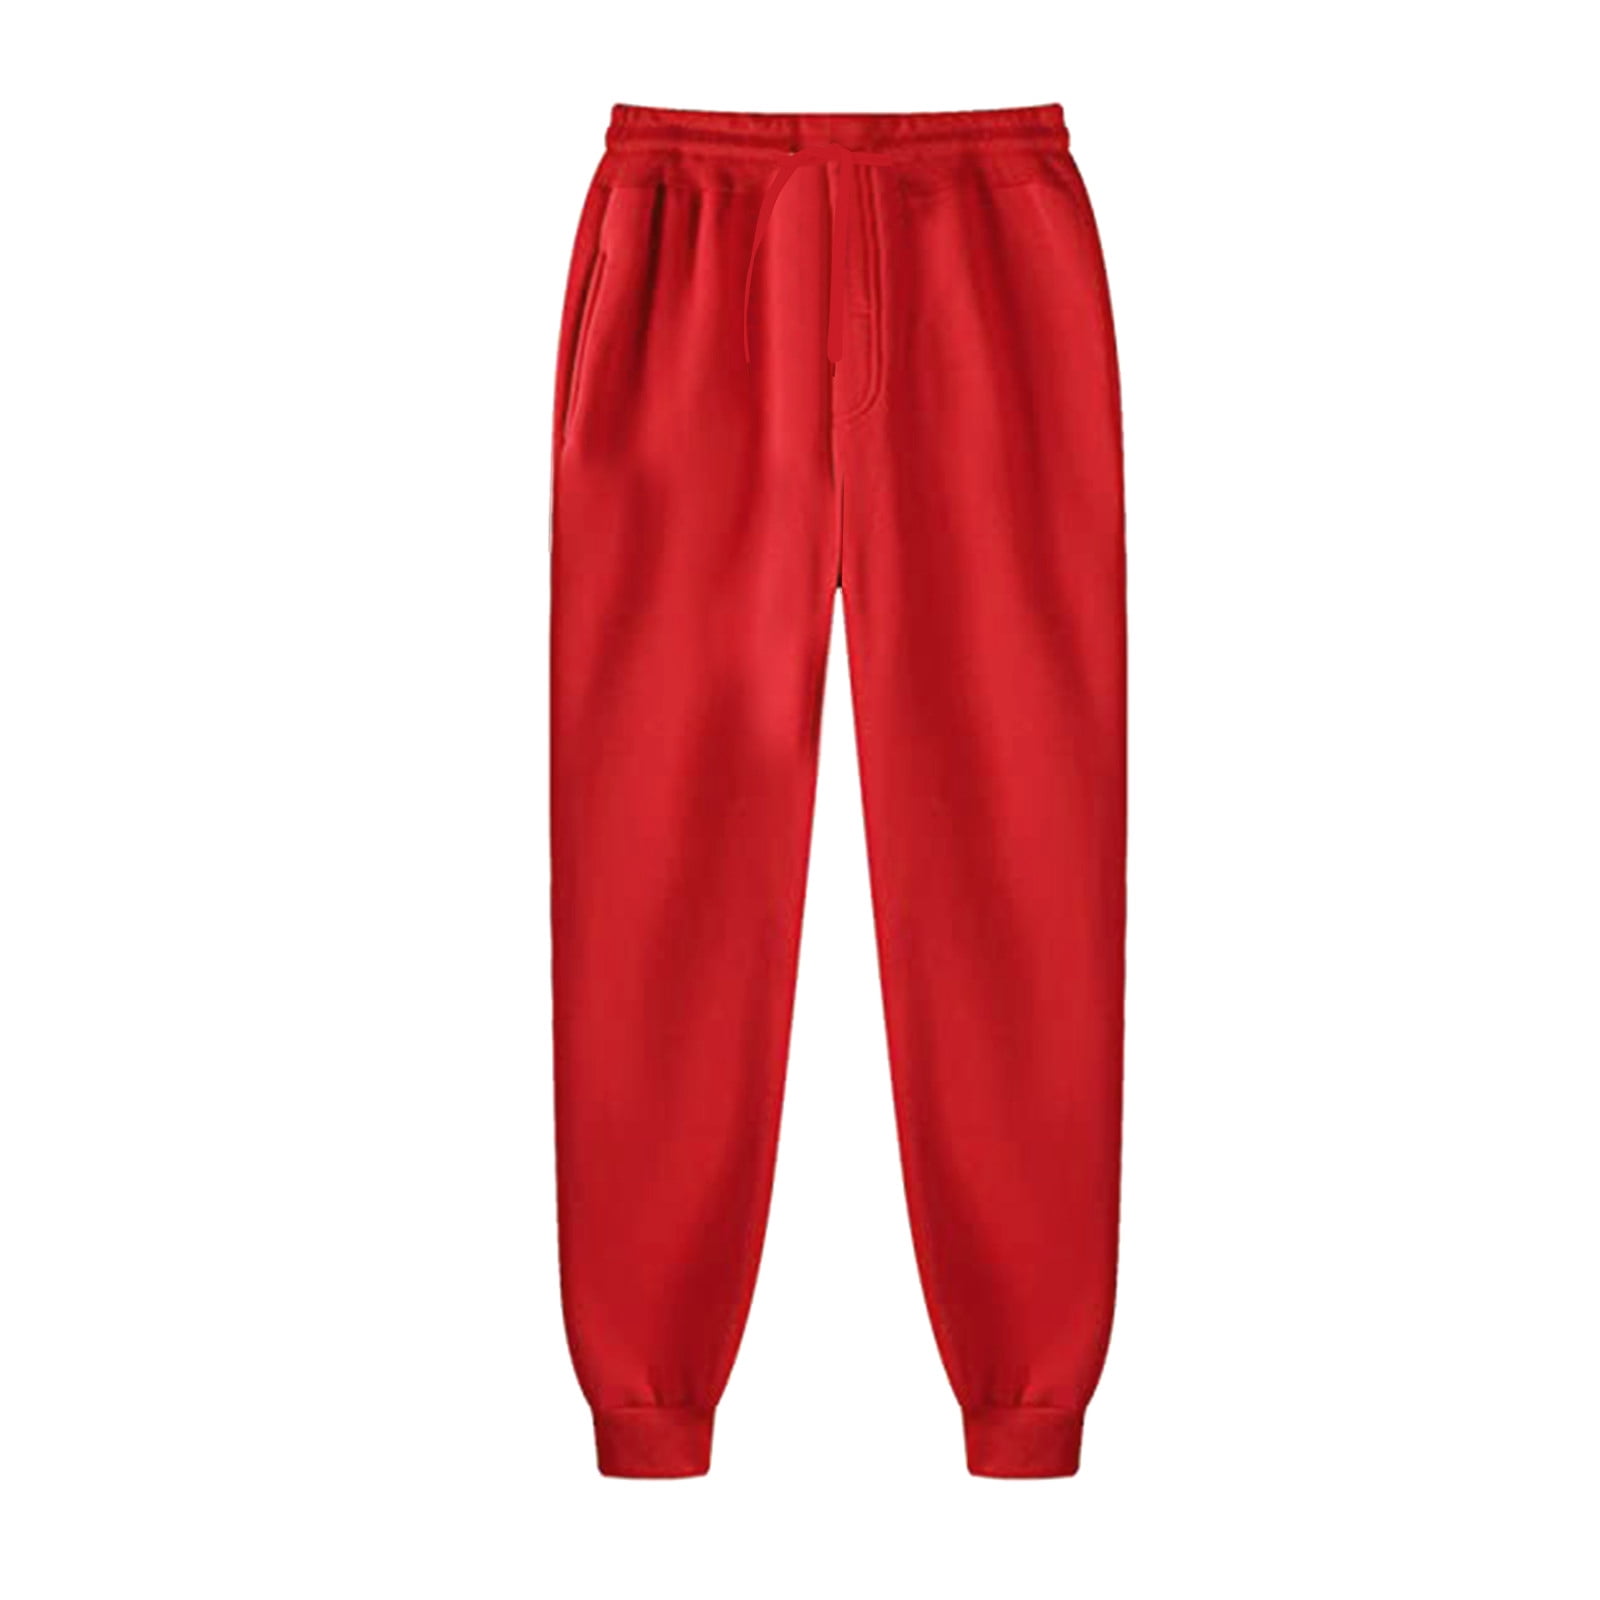 kpoplk Open Bottom Sweatpants For Men, hop Sweat Pants Autumn Spring Men 3D  Print Sweatpants Homme Fitness Workout Full Length Pants(Red,S)